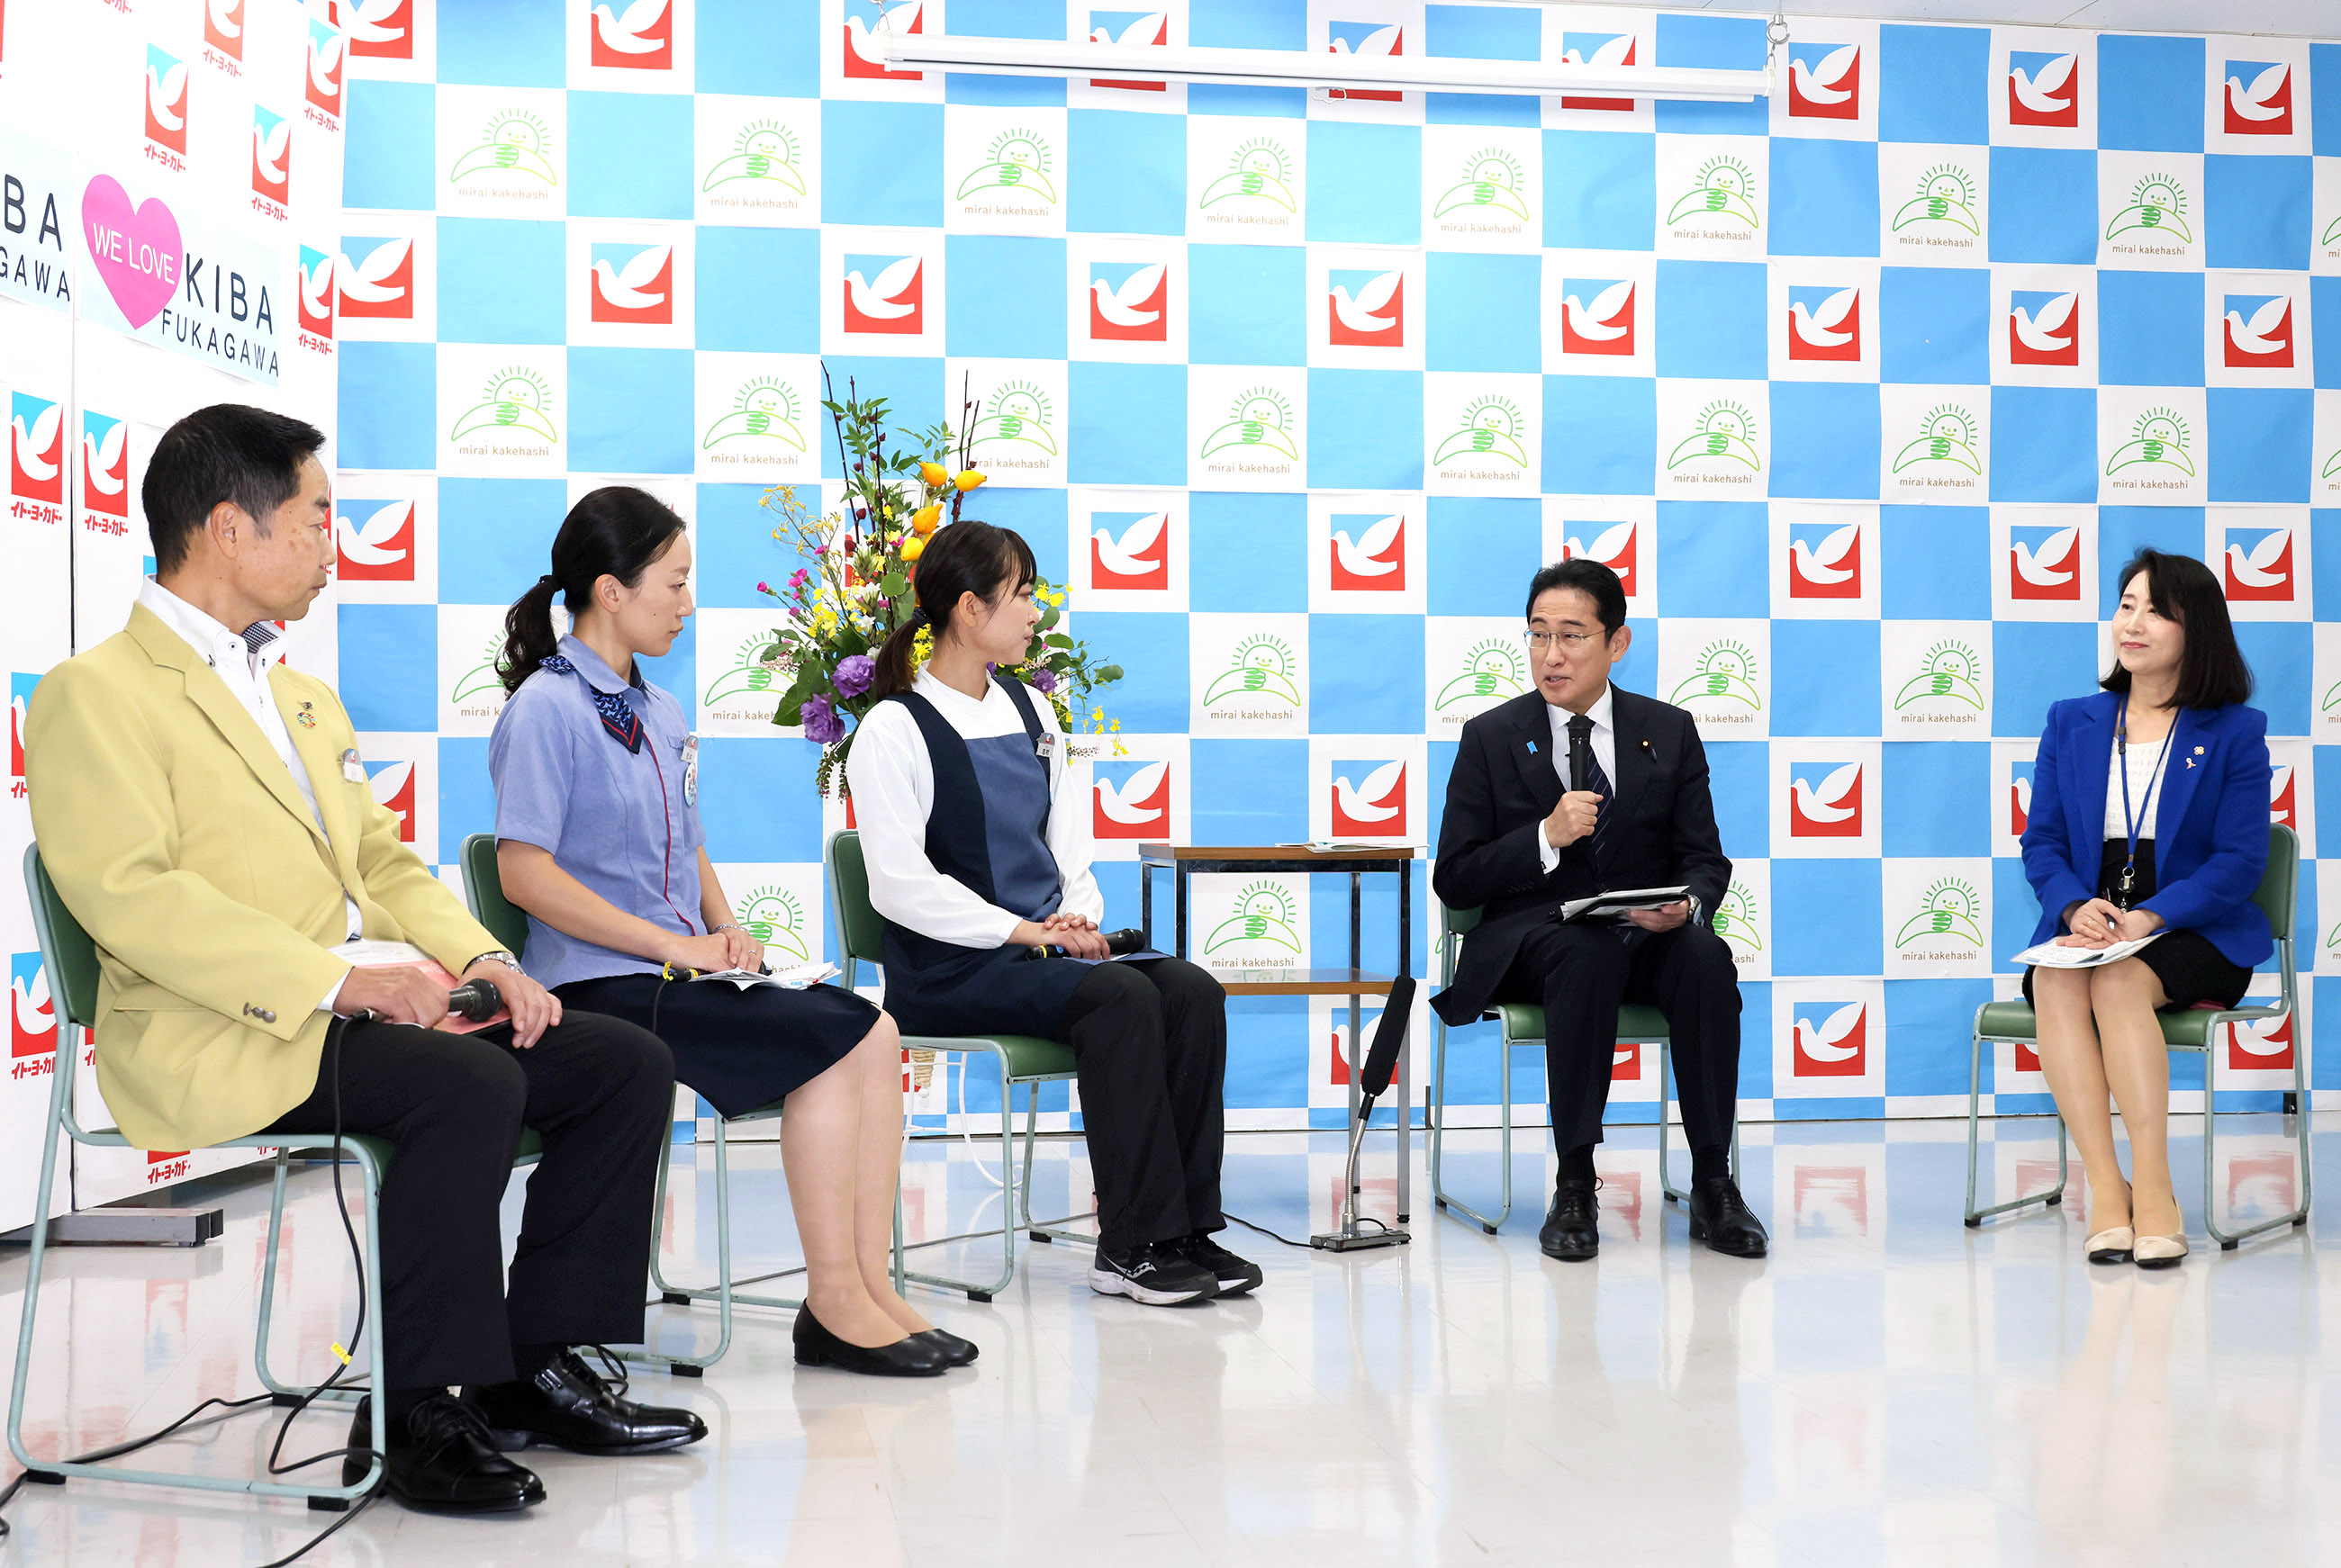 Prime Minister Kishida speaking at the small group talk (3)